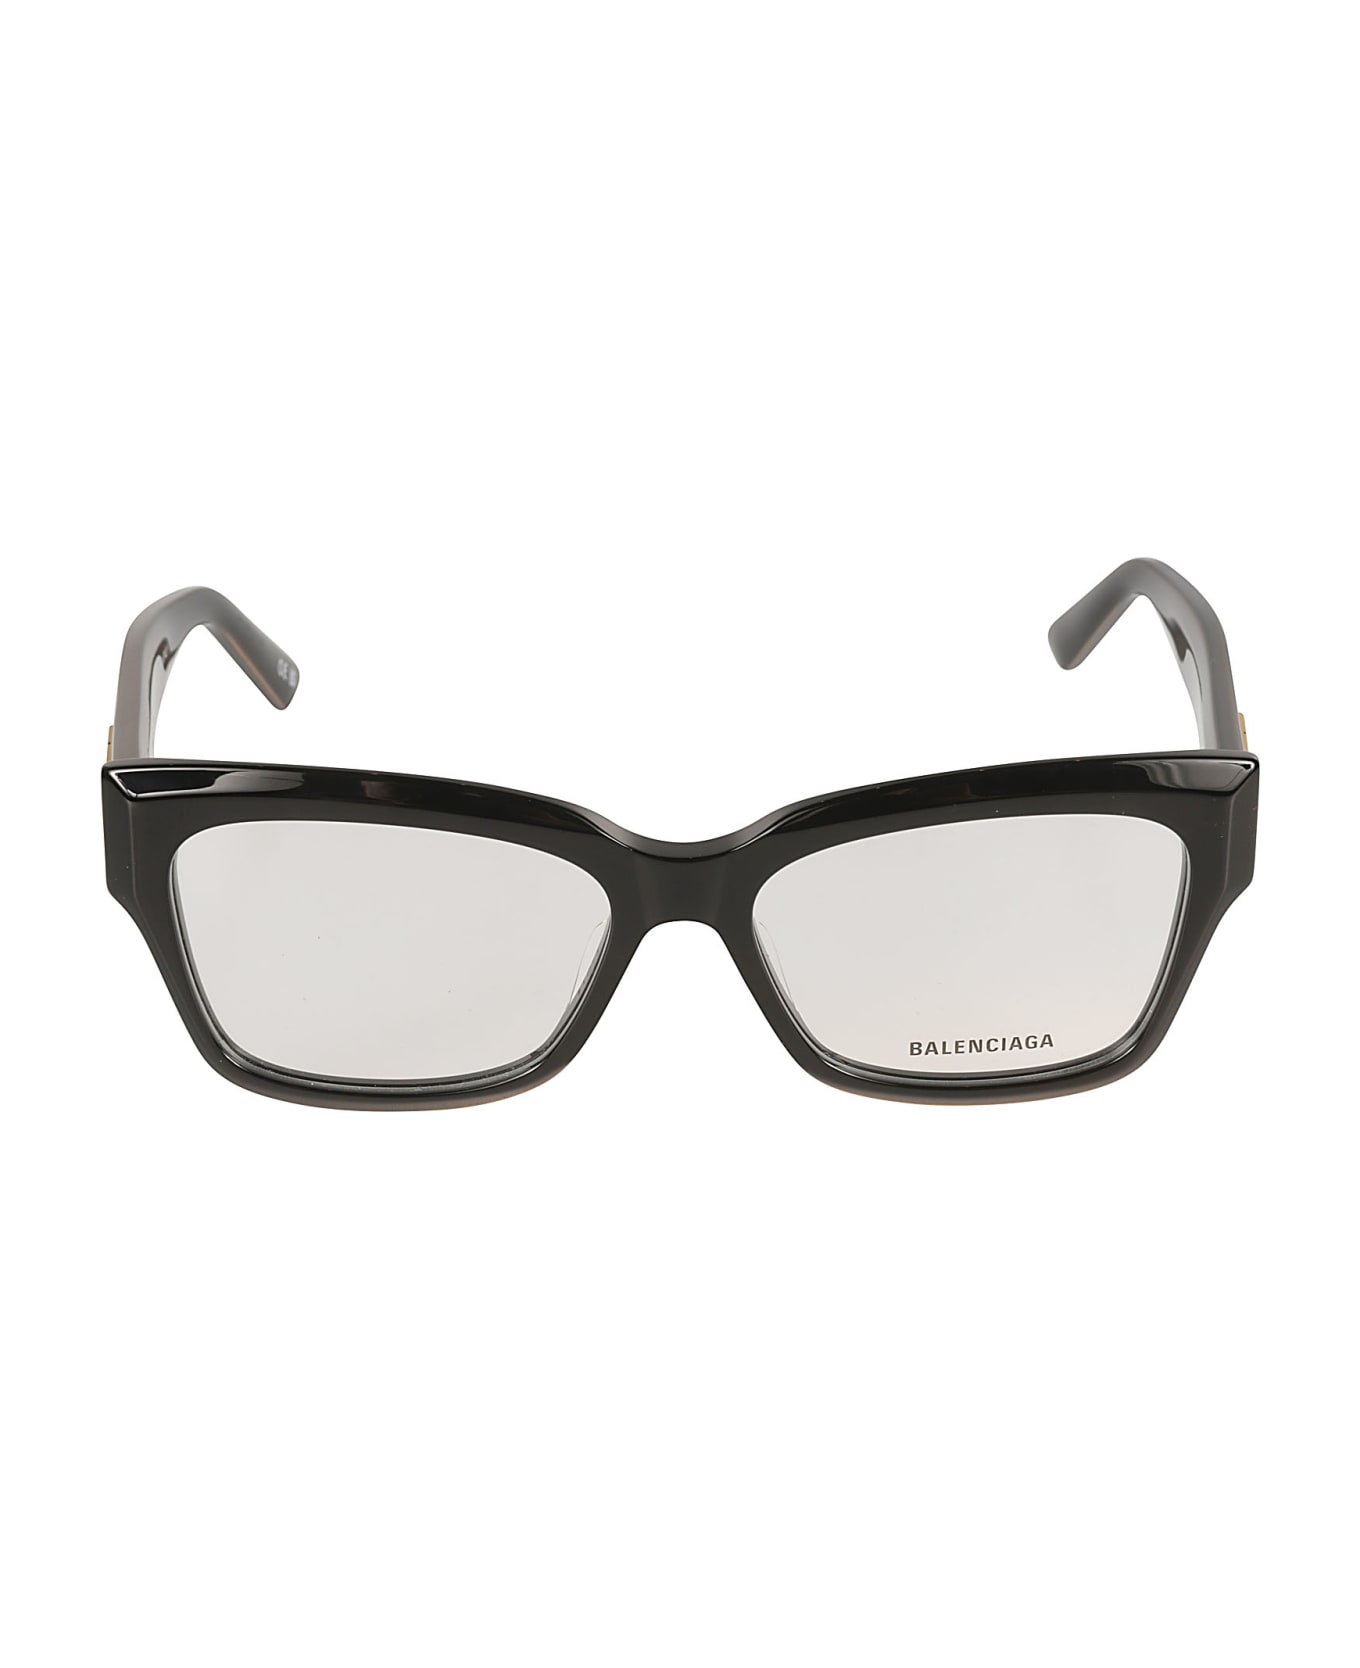 Balenciaga Eyewear Bb Plaque Square Frame Glasses - Black/Transparent